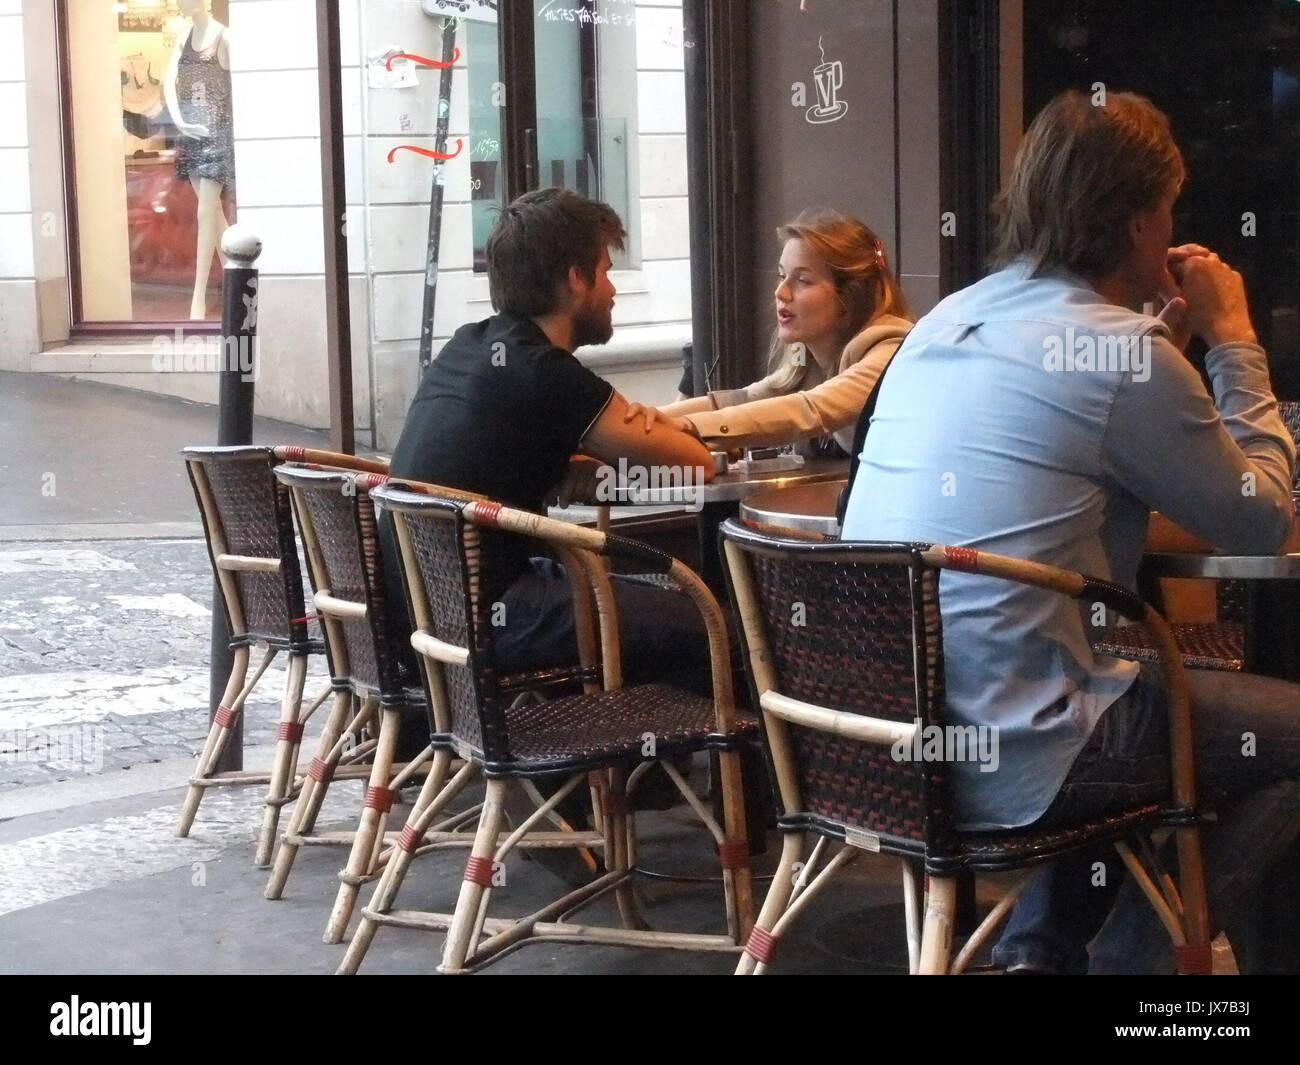 An intense moment between a romantic couple in a pavement café in Montmartre, Paris Stock Photo